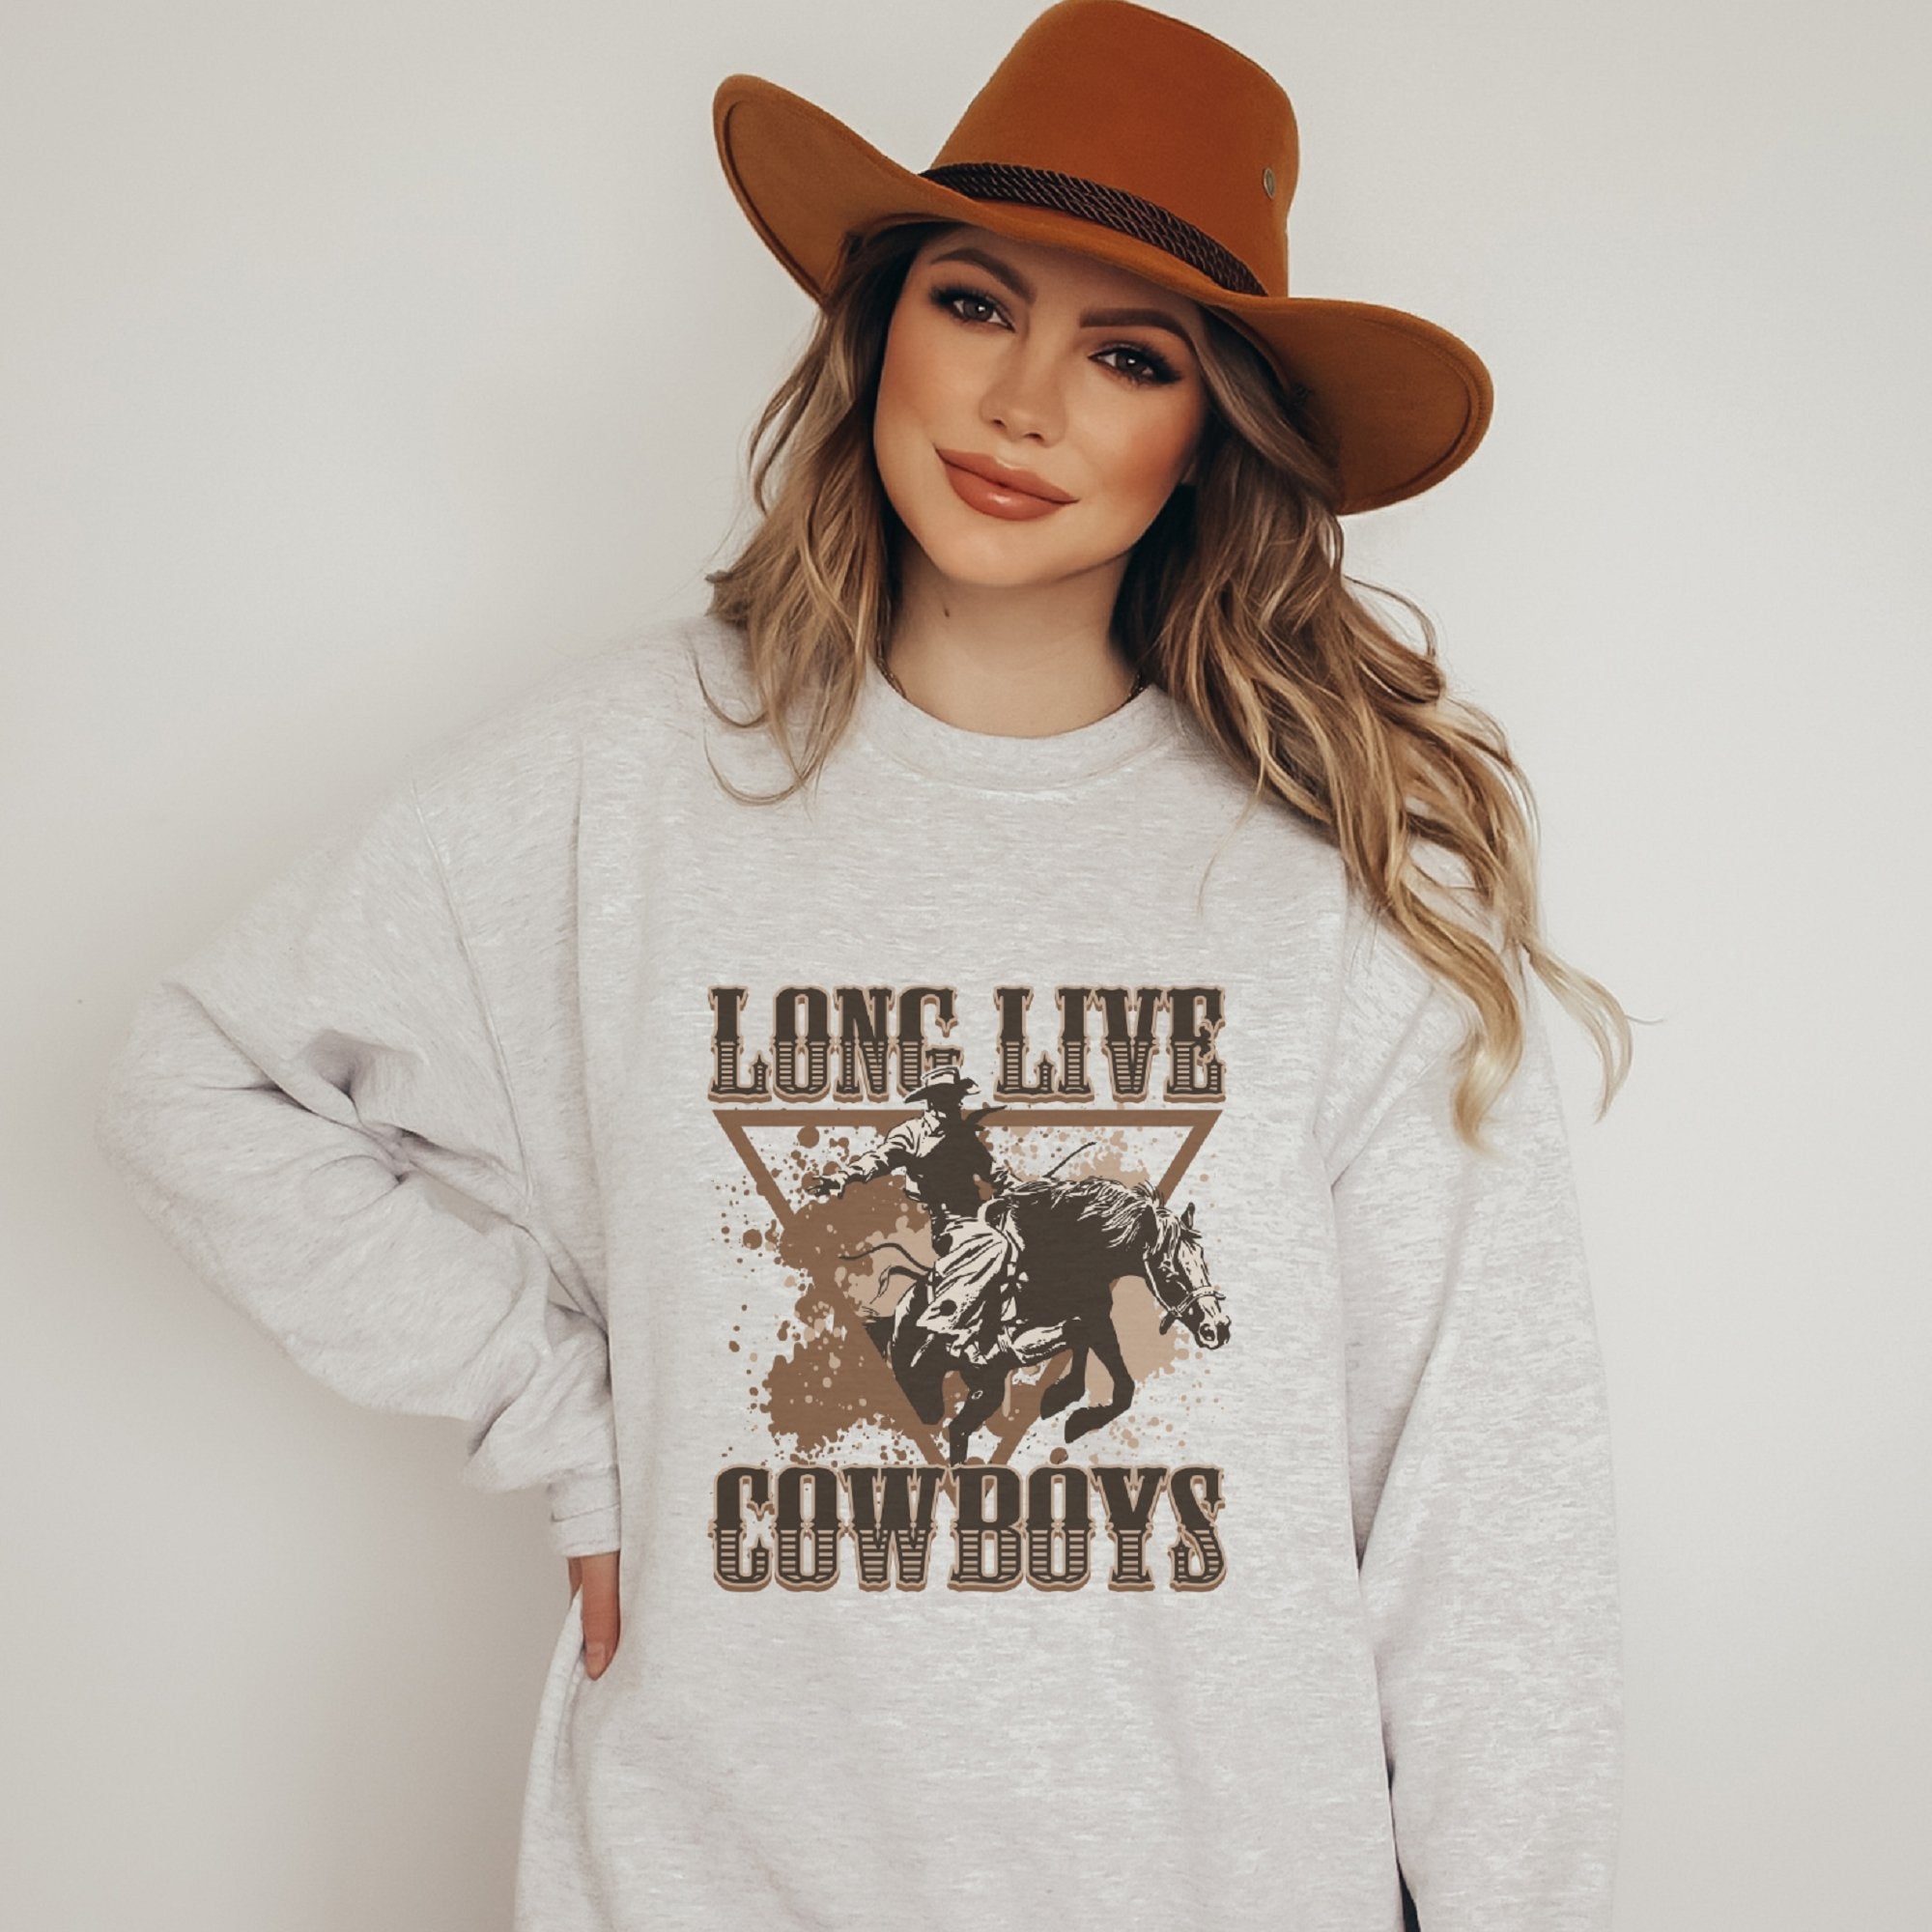 This Country Needs More Cowboys Crewneck Sweatshirt – Trendznmore